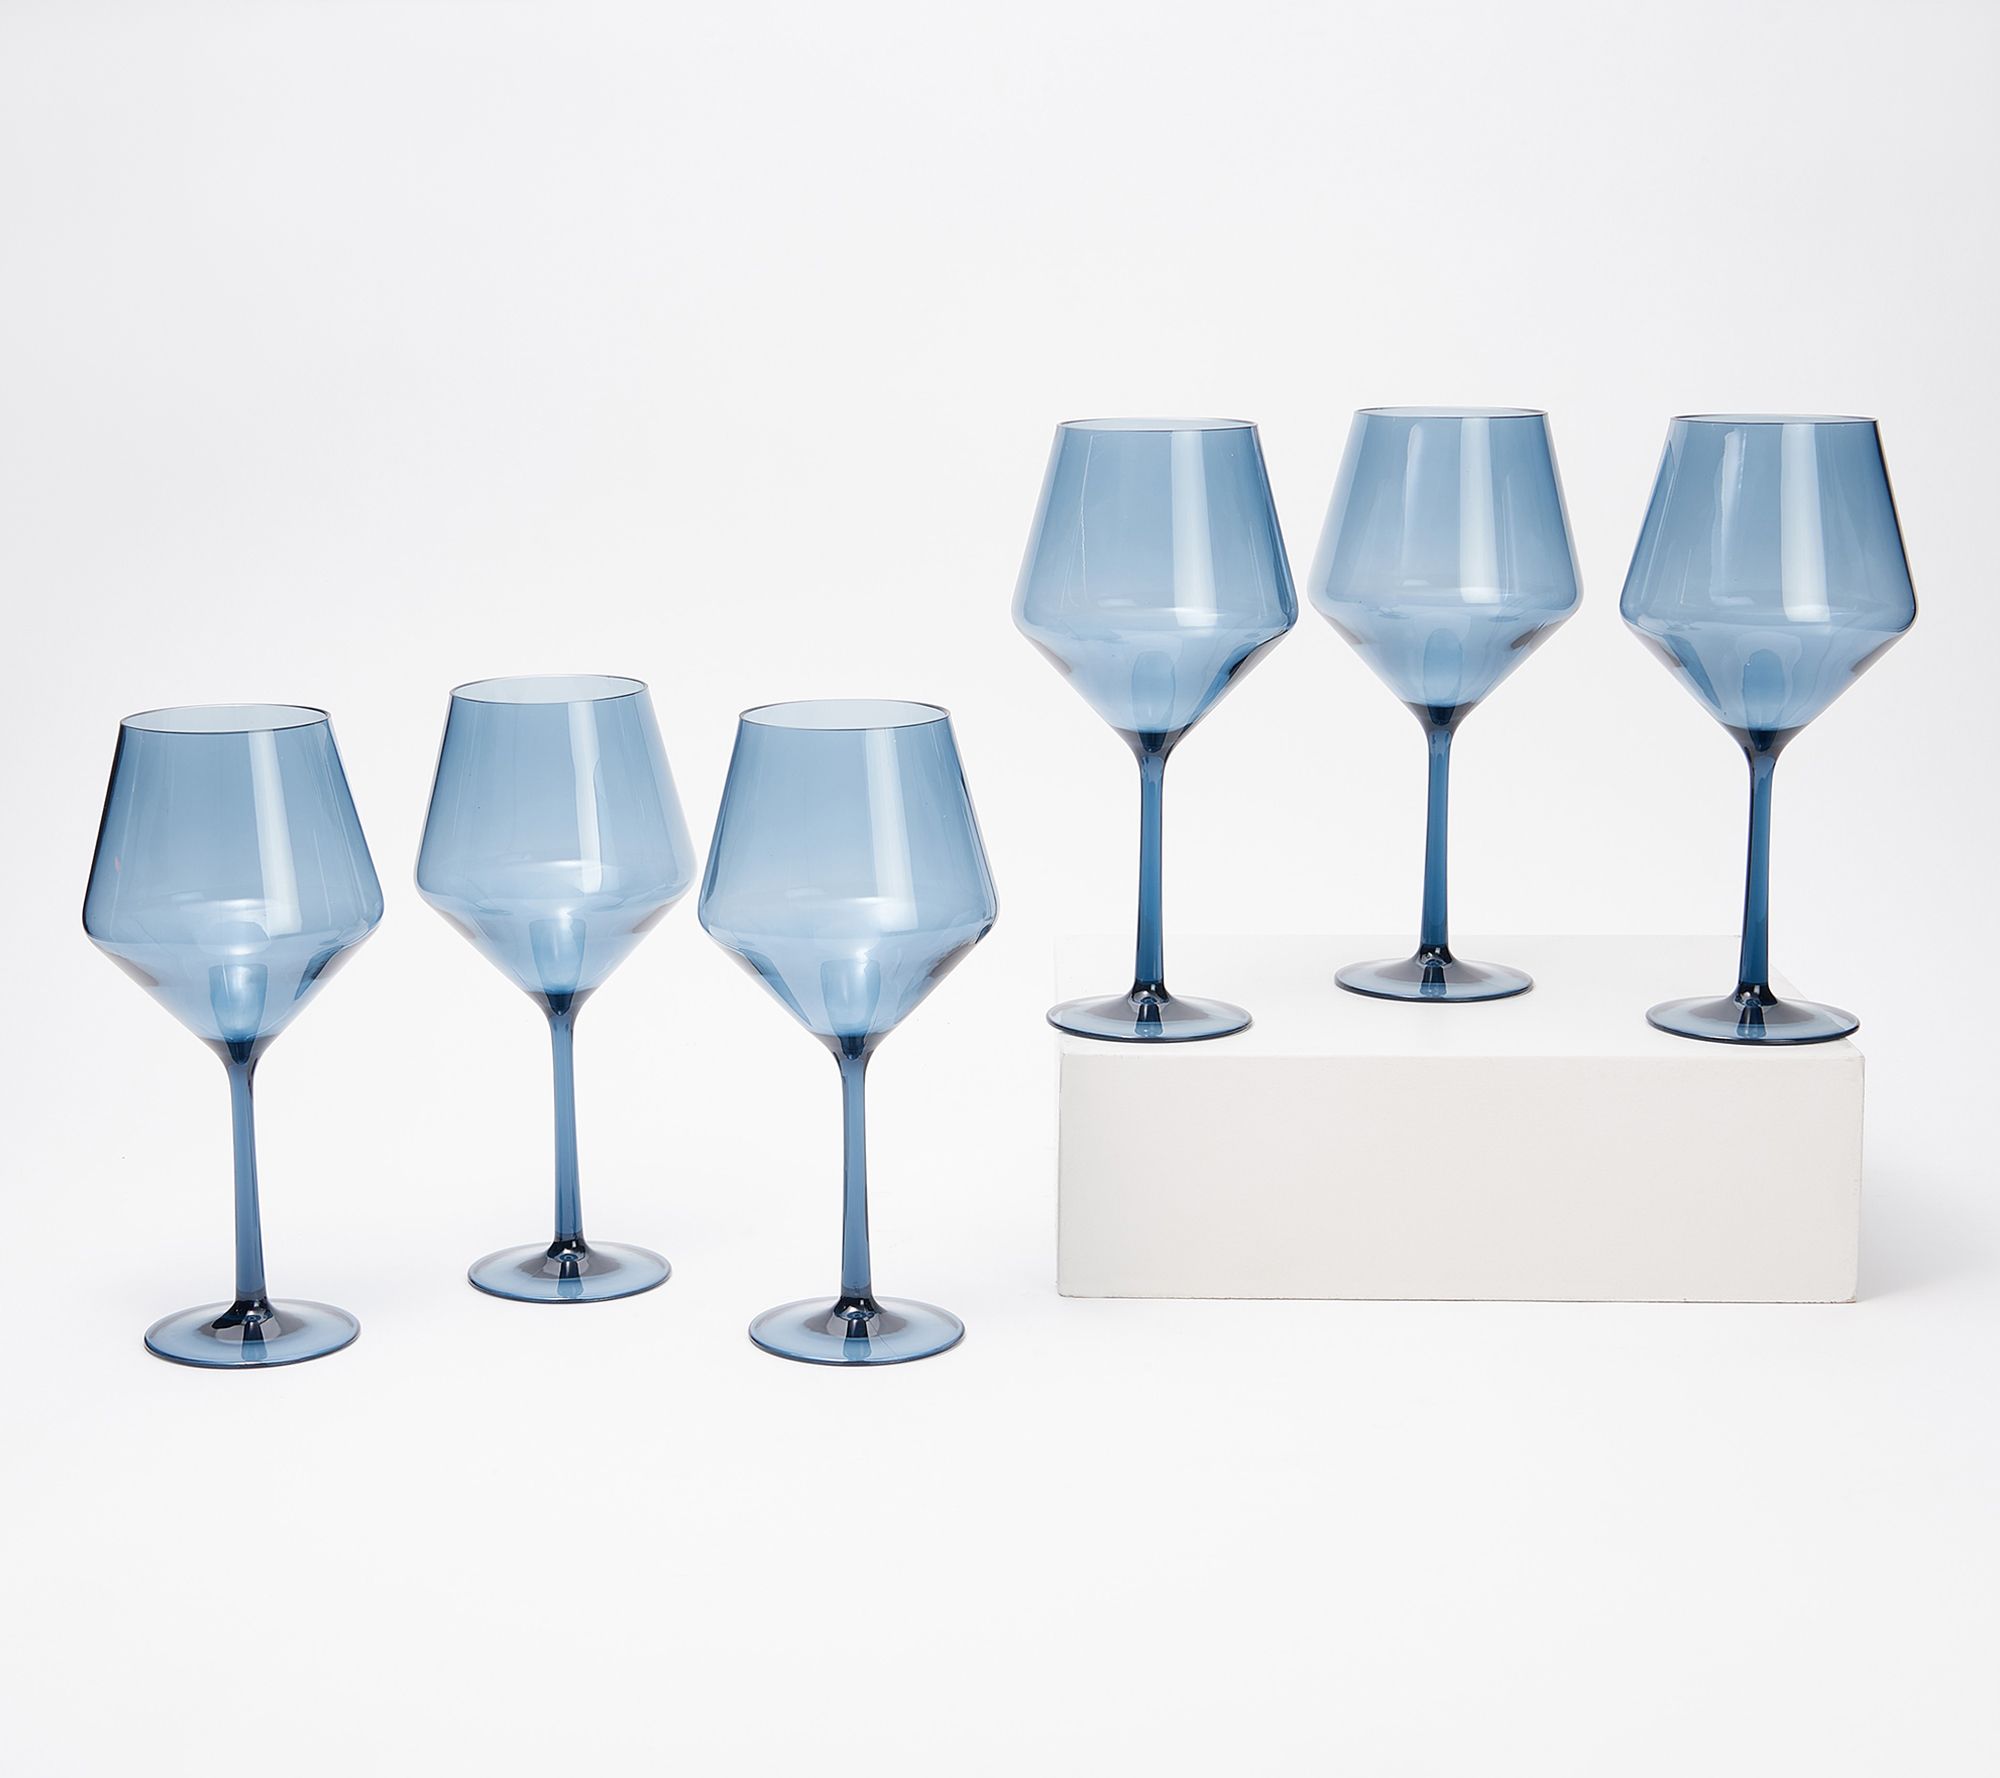 Peace Love World Set of 4 White Wine Glasses 